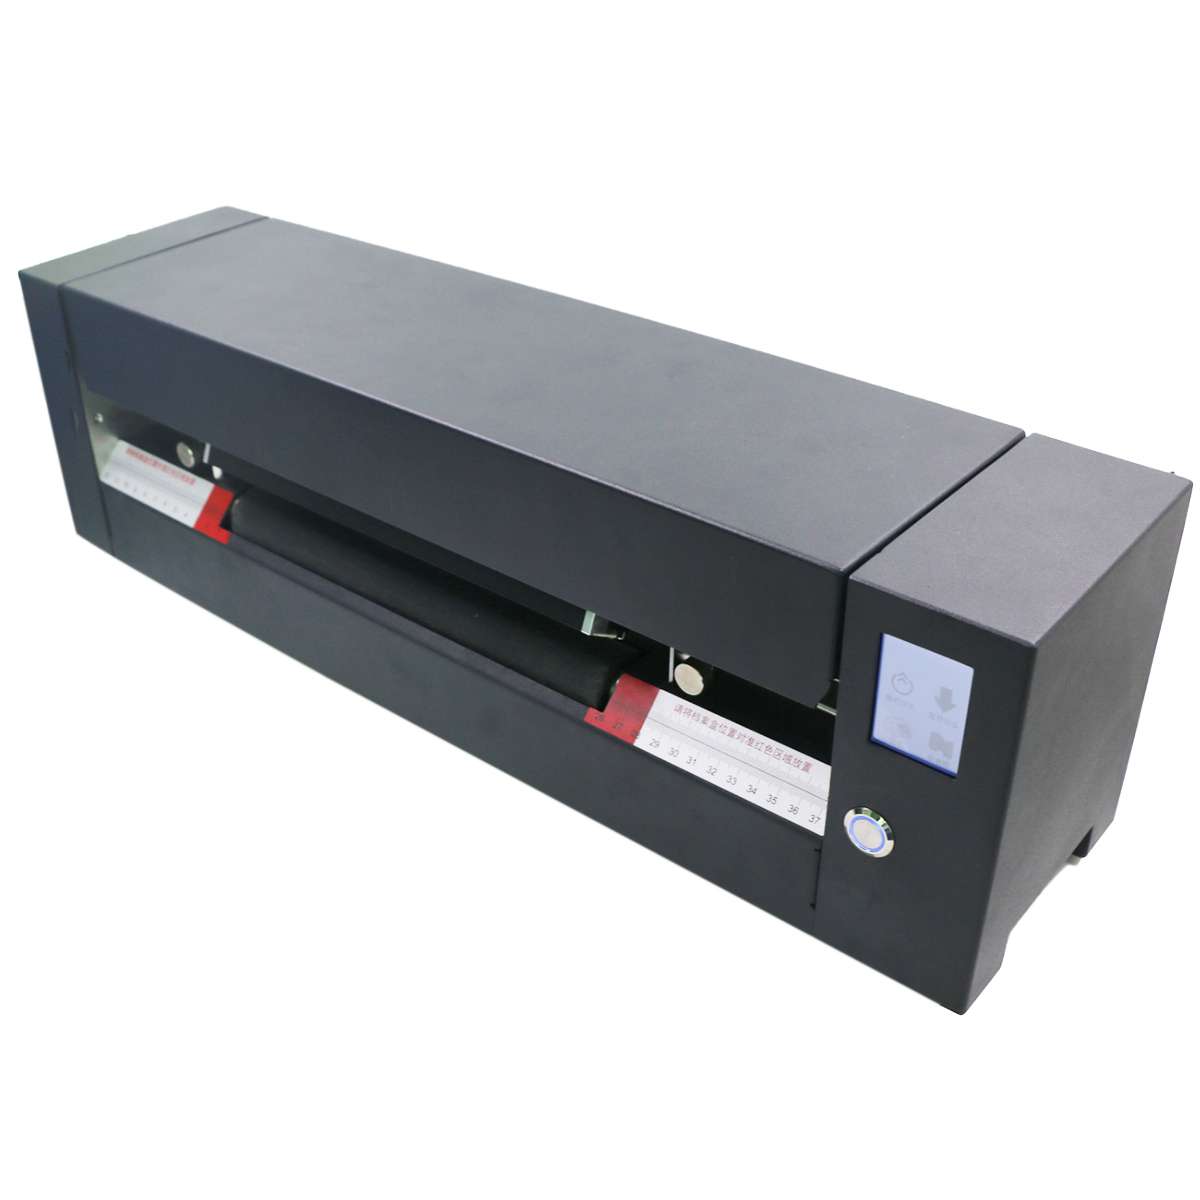 Archives printer thermal transfer printer MS-TTR350